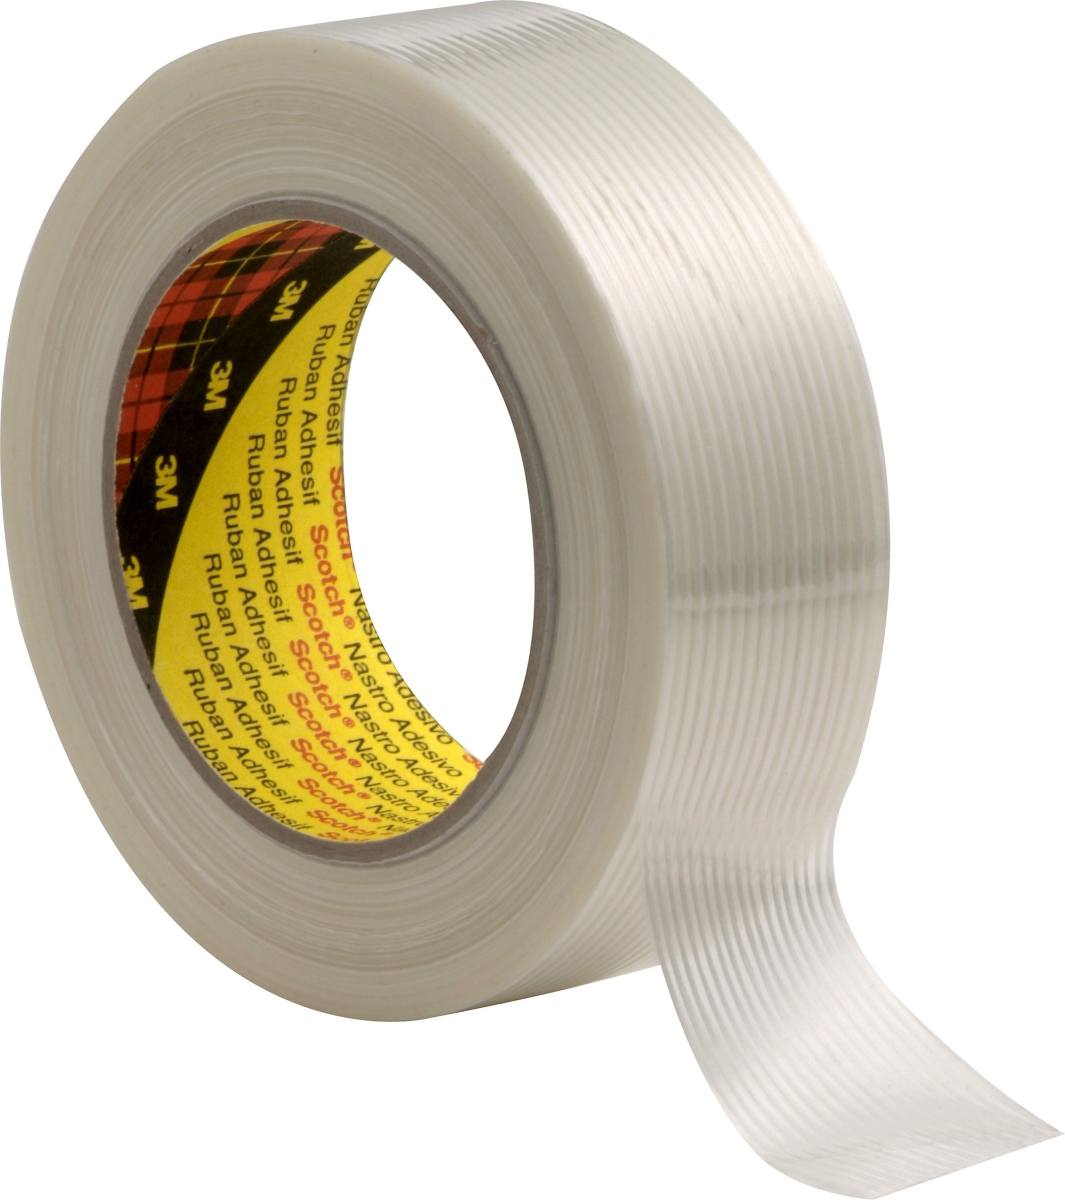 3M Scotch Filamentklebeband 8915, Transparent, 18 mm x 55 m, 0,15 mm